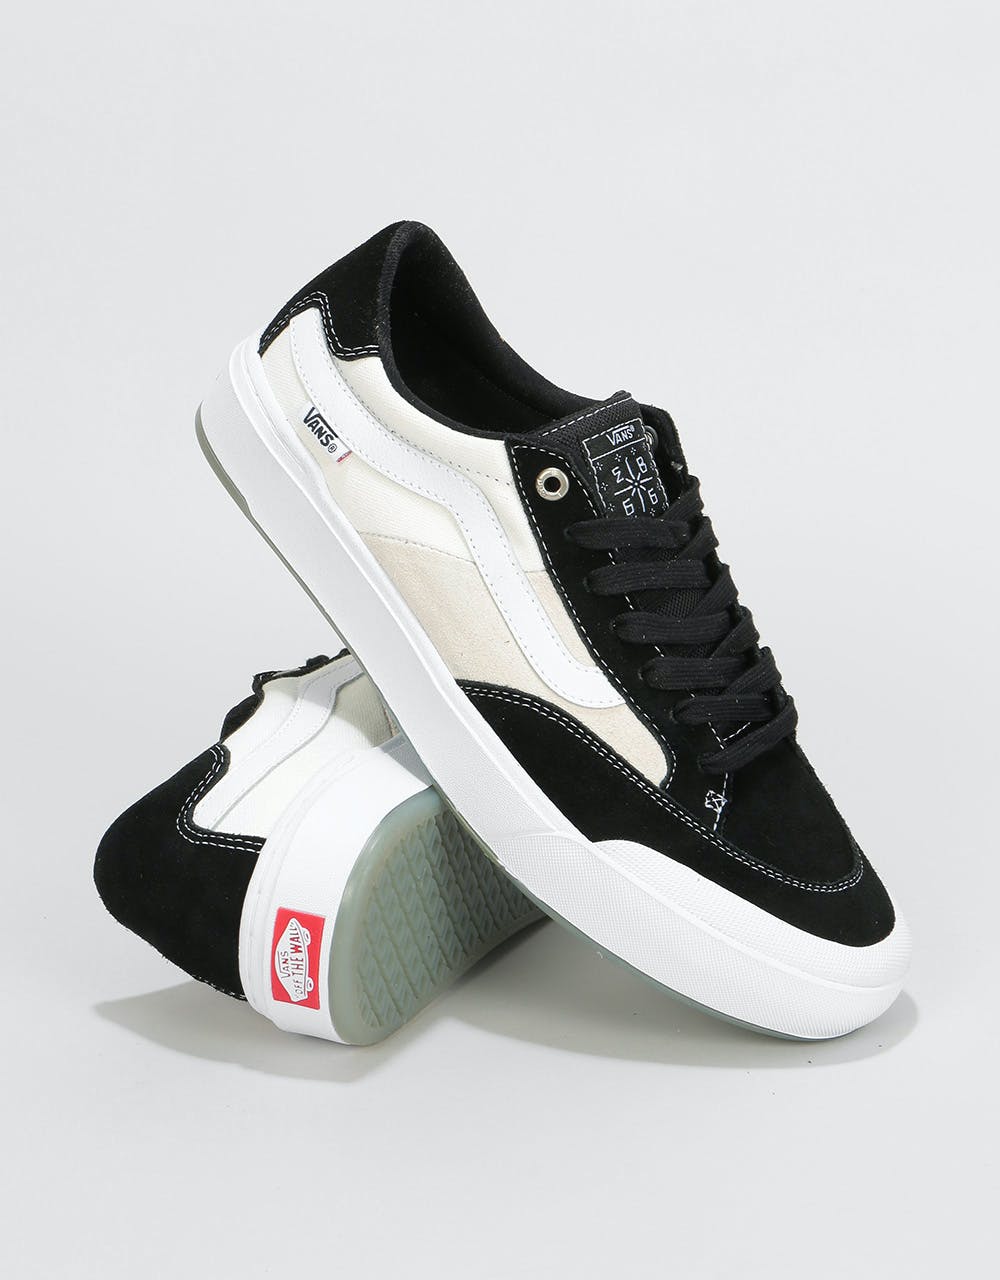 Vans Berle Pro Skate Shoes - Black/White